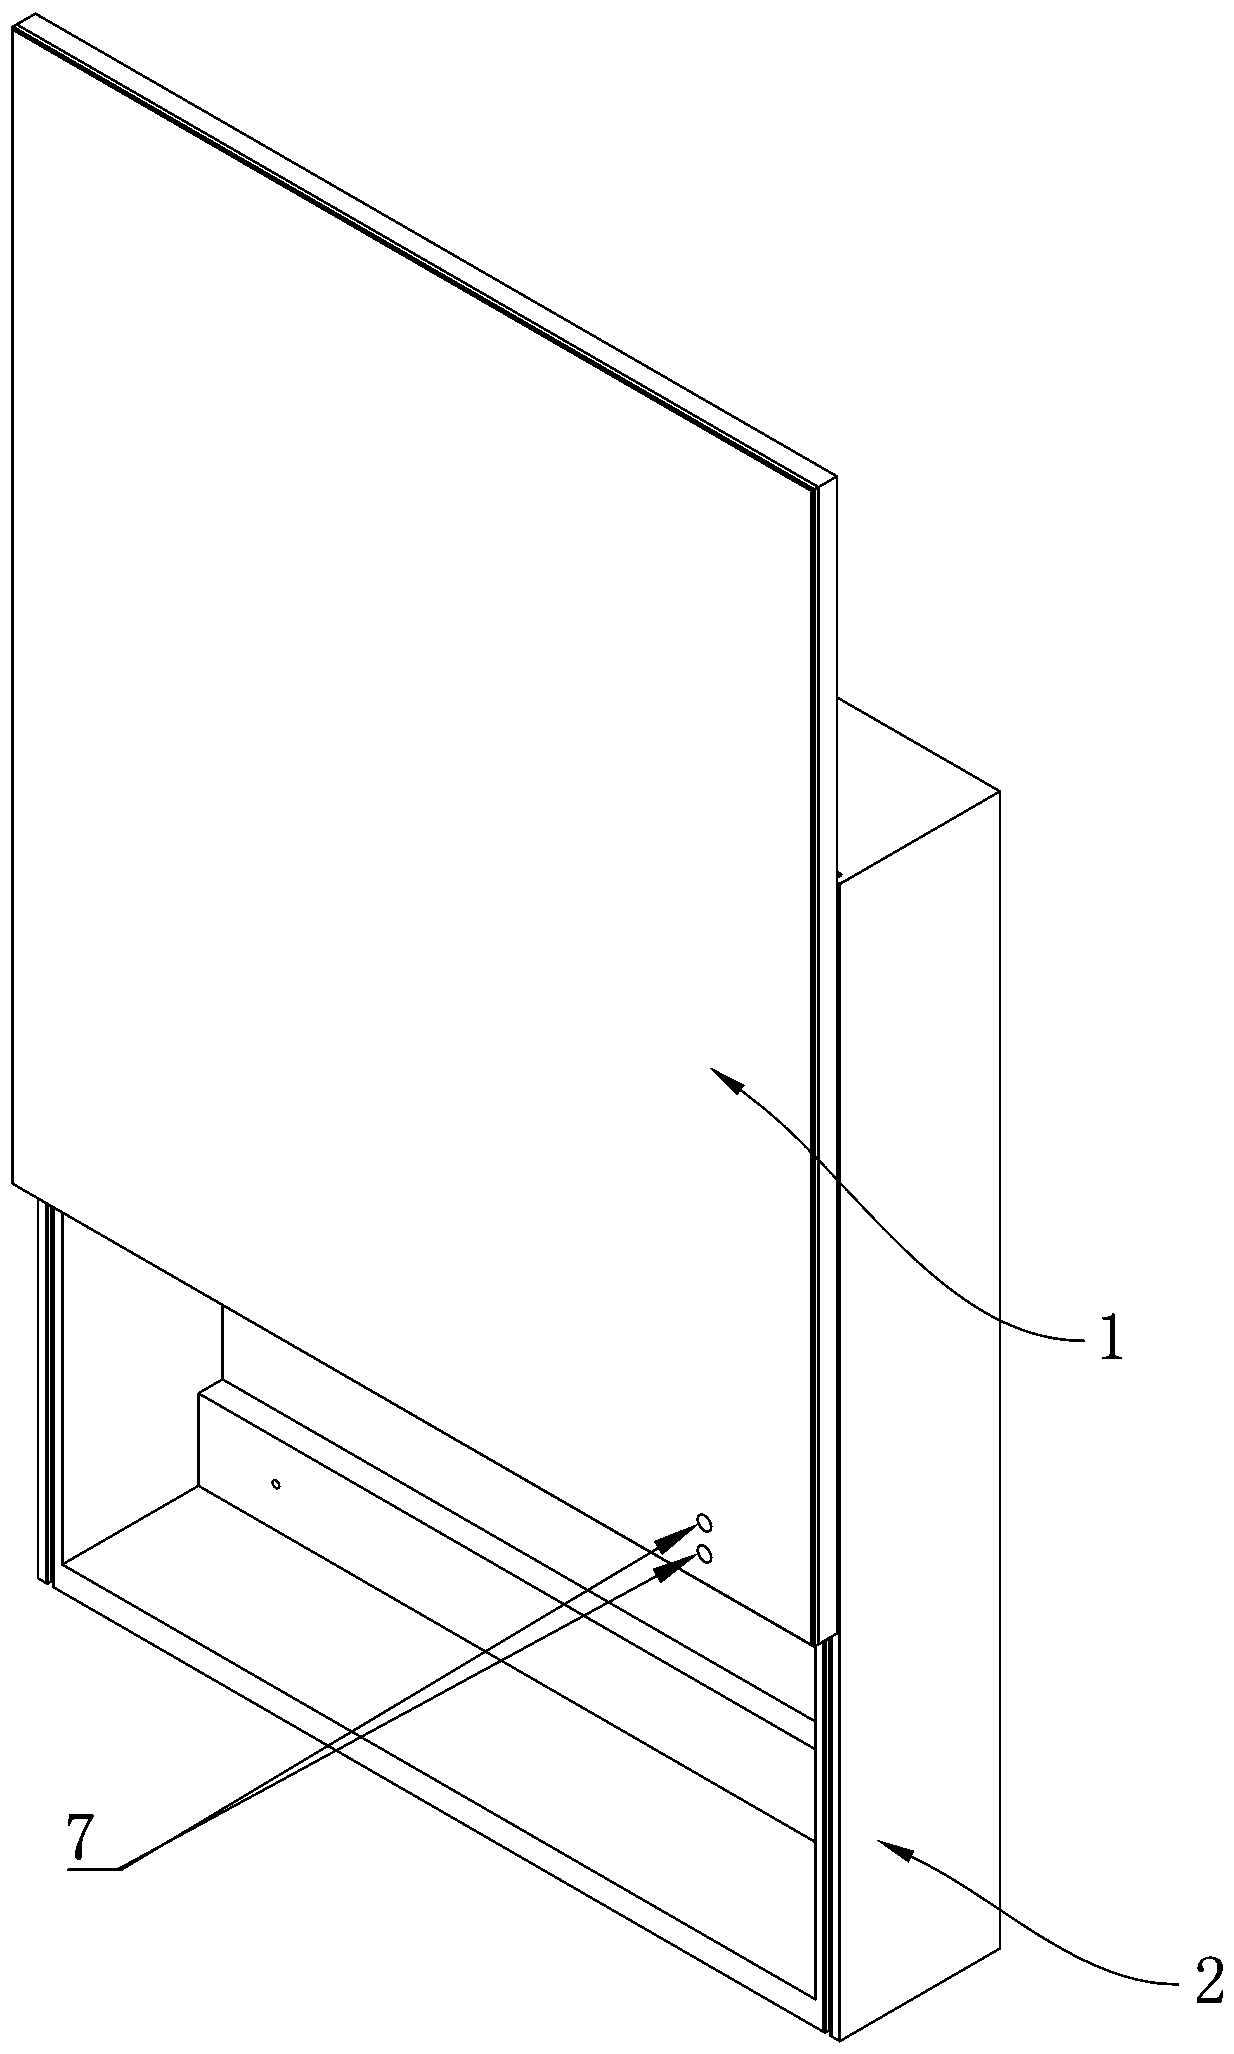 Cabinet door structure and mirror cabinet